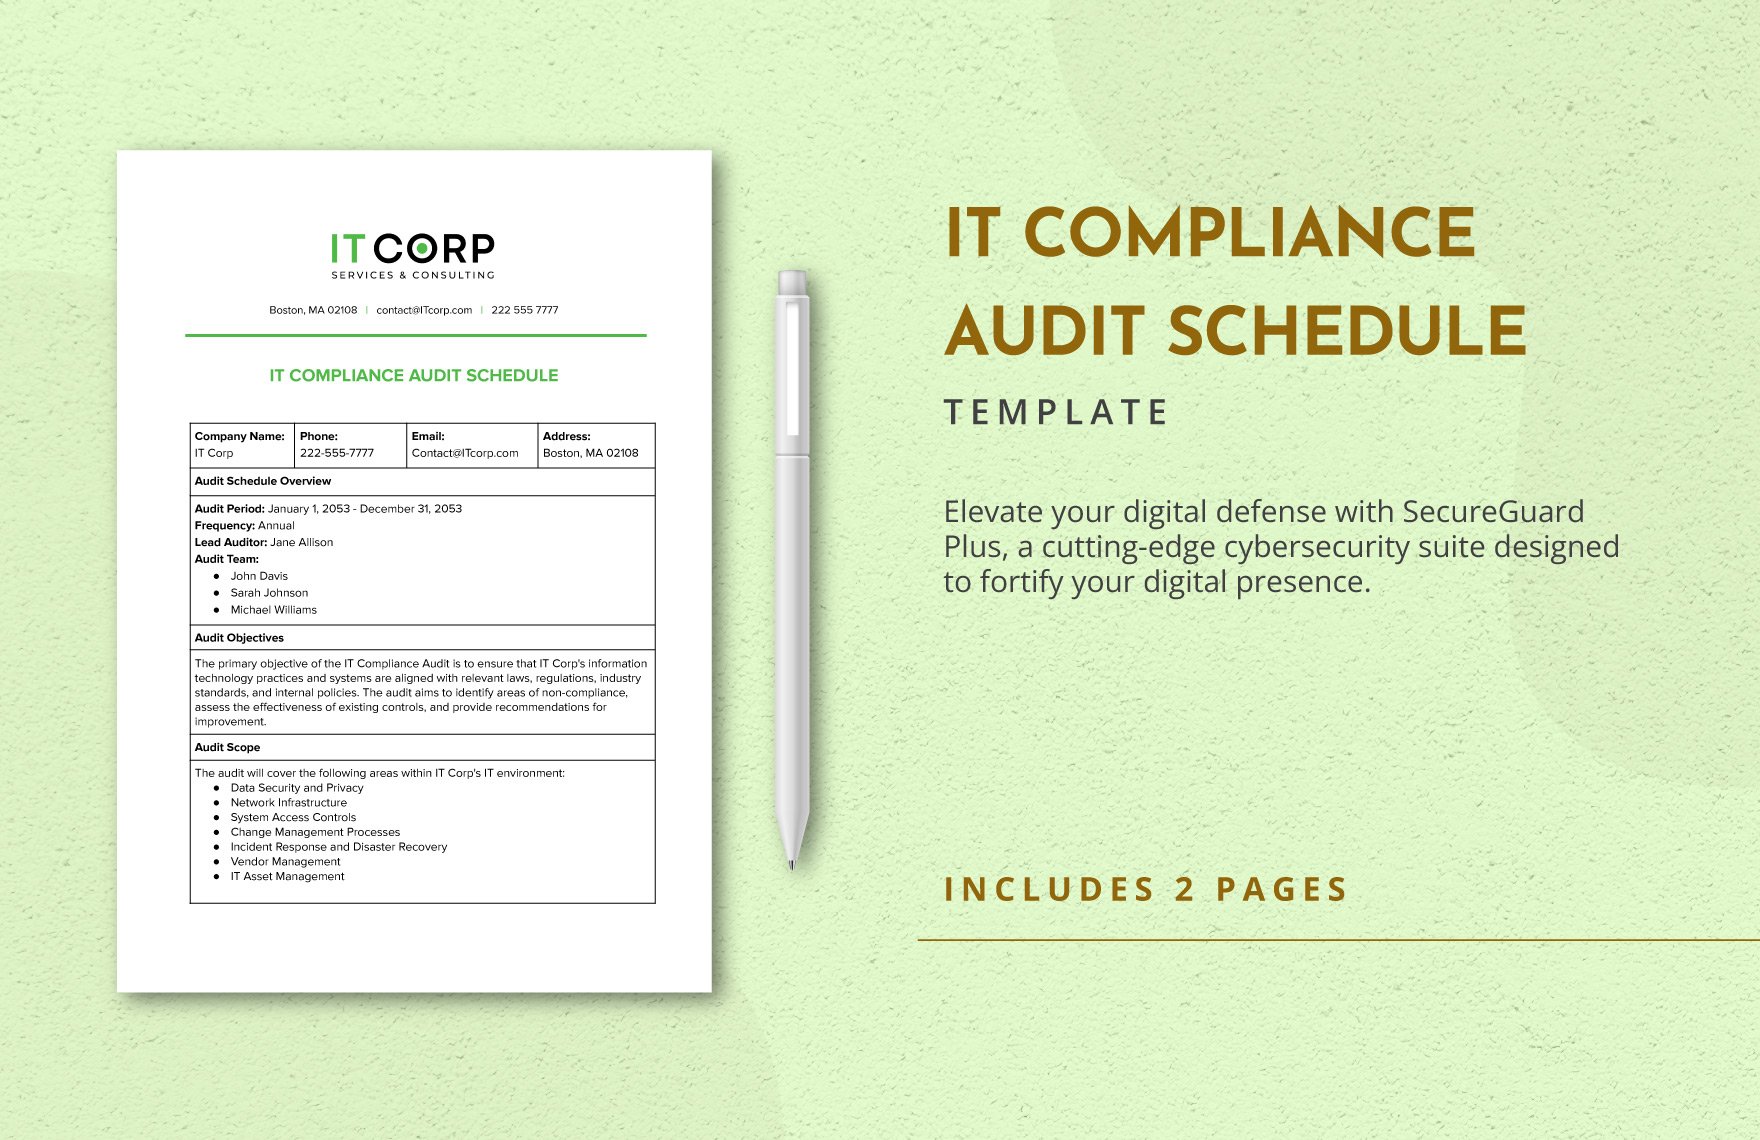 IT Compliance Audit Schedule Template in Word, Google Docs, PDF